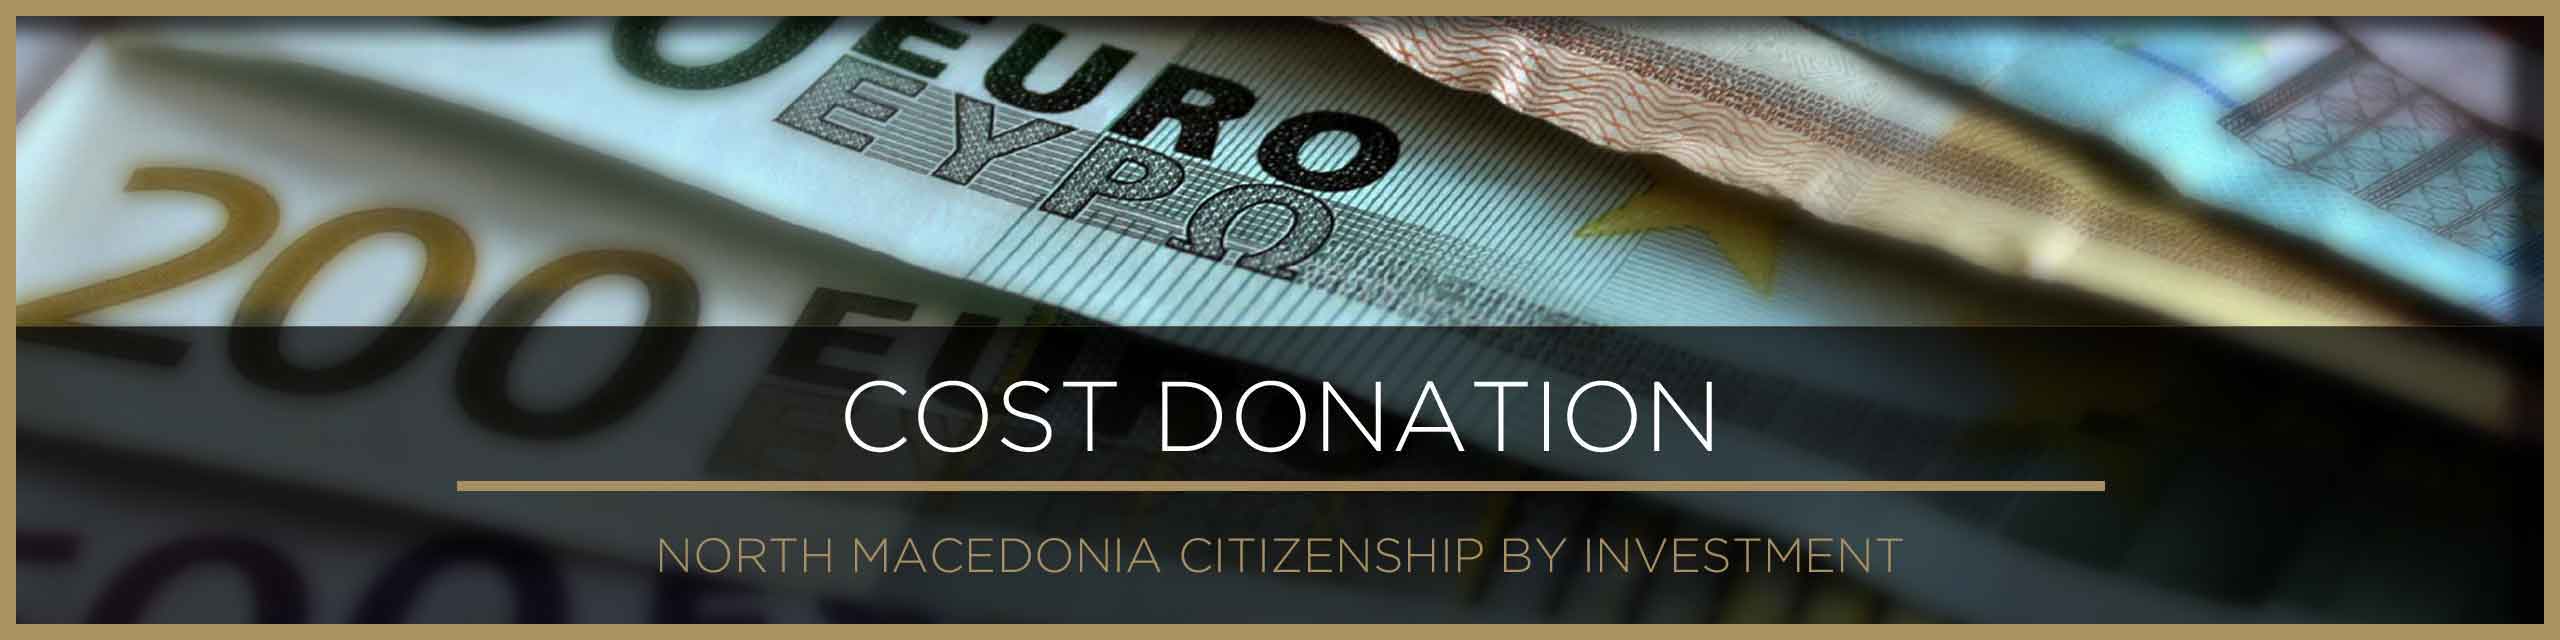 North Macedonia citizenship costs 